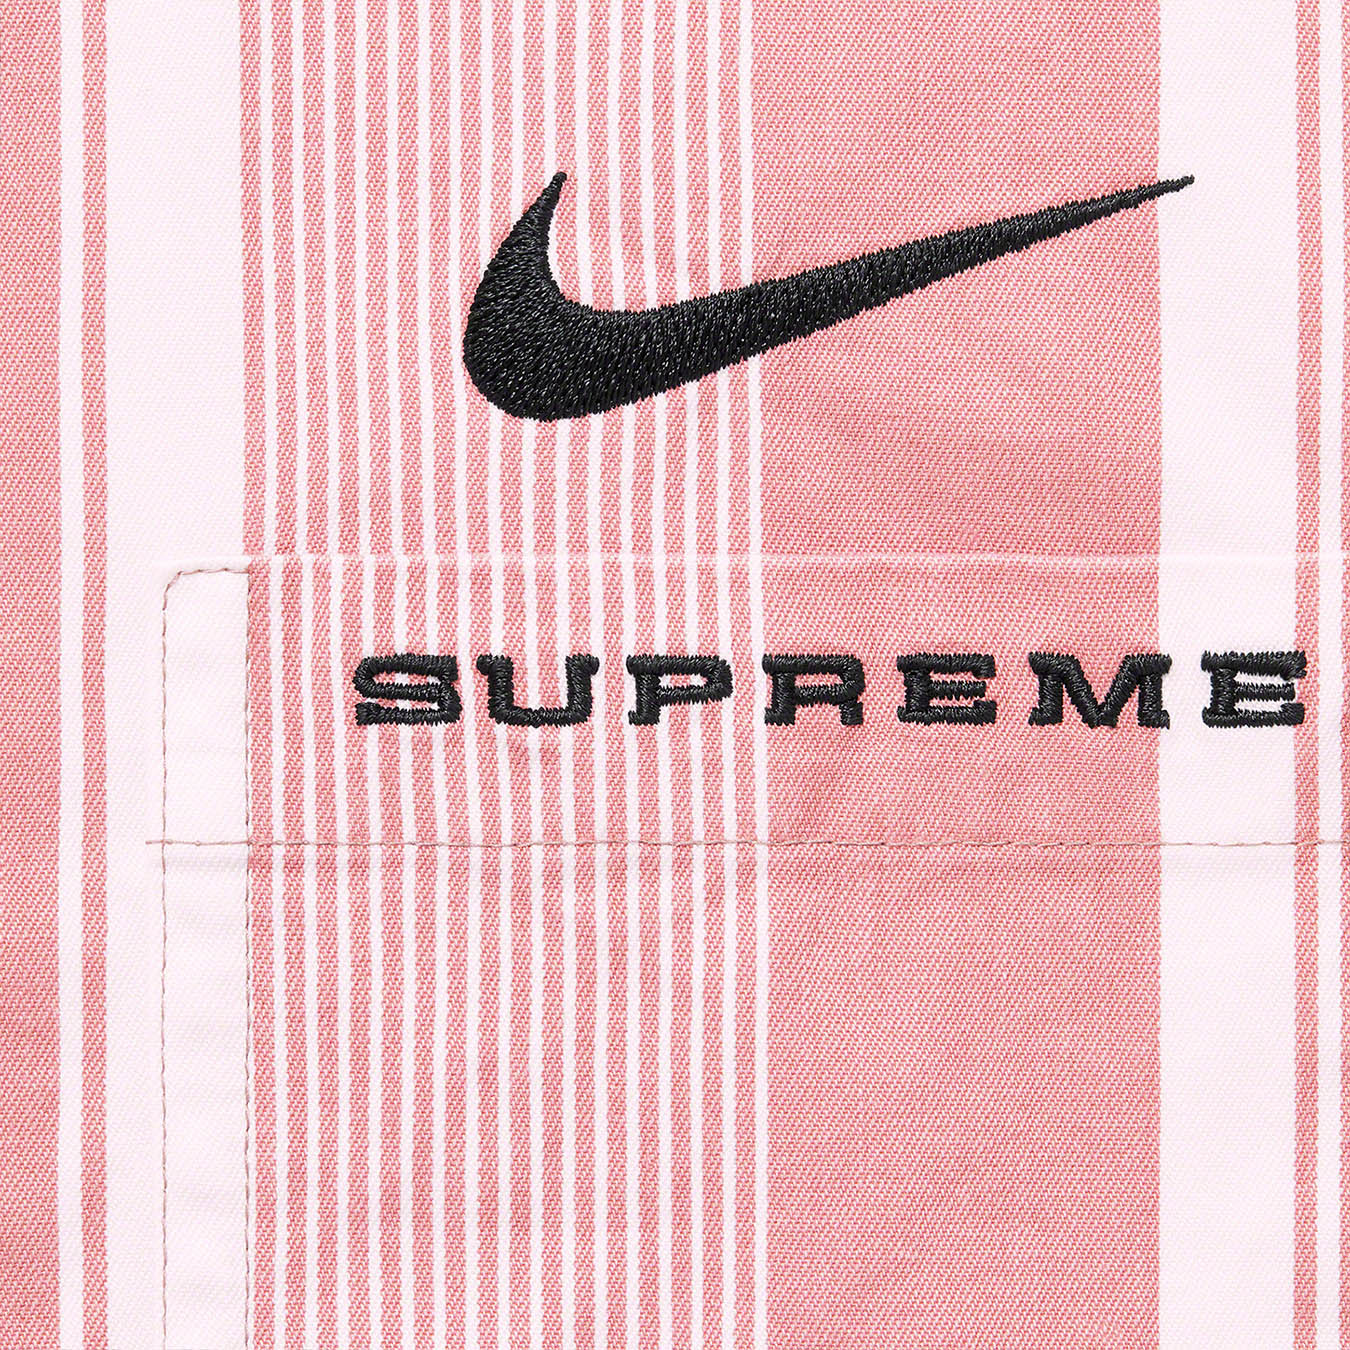 Supreme®/Nike® Cotton Twill Shirt